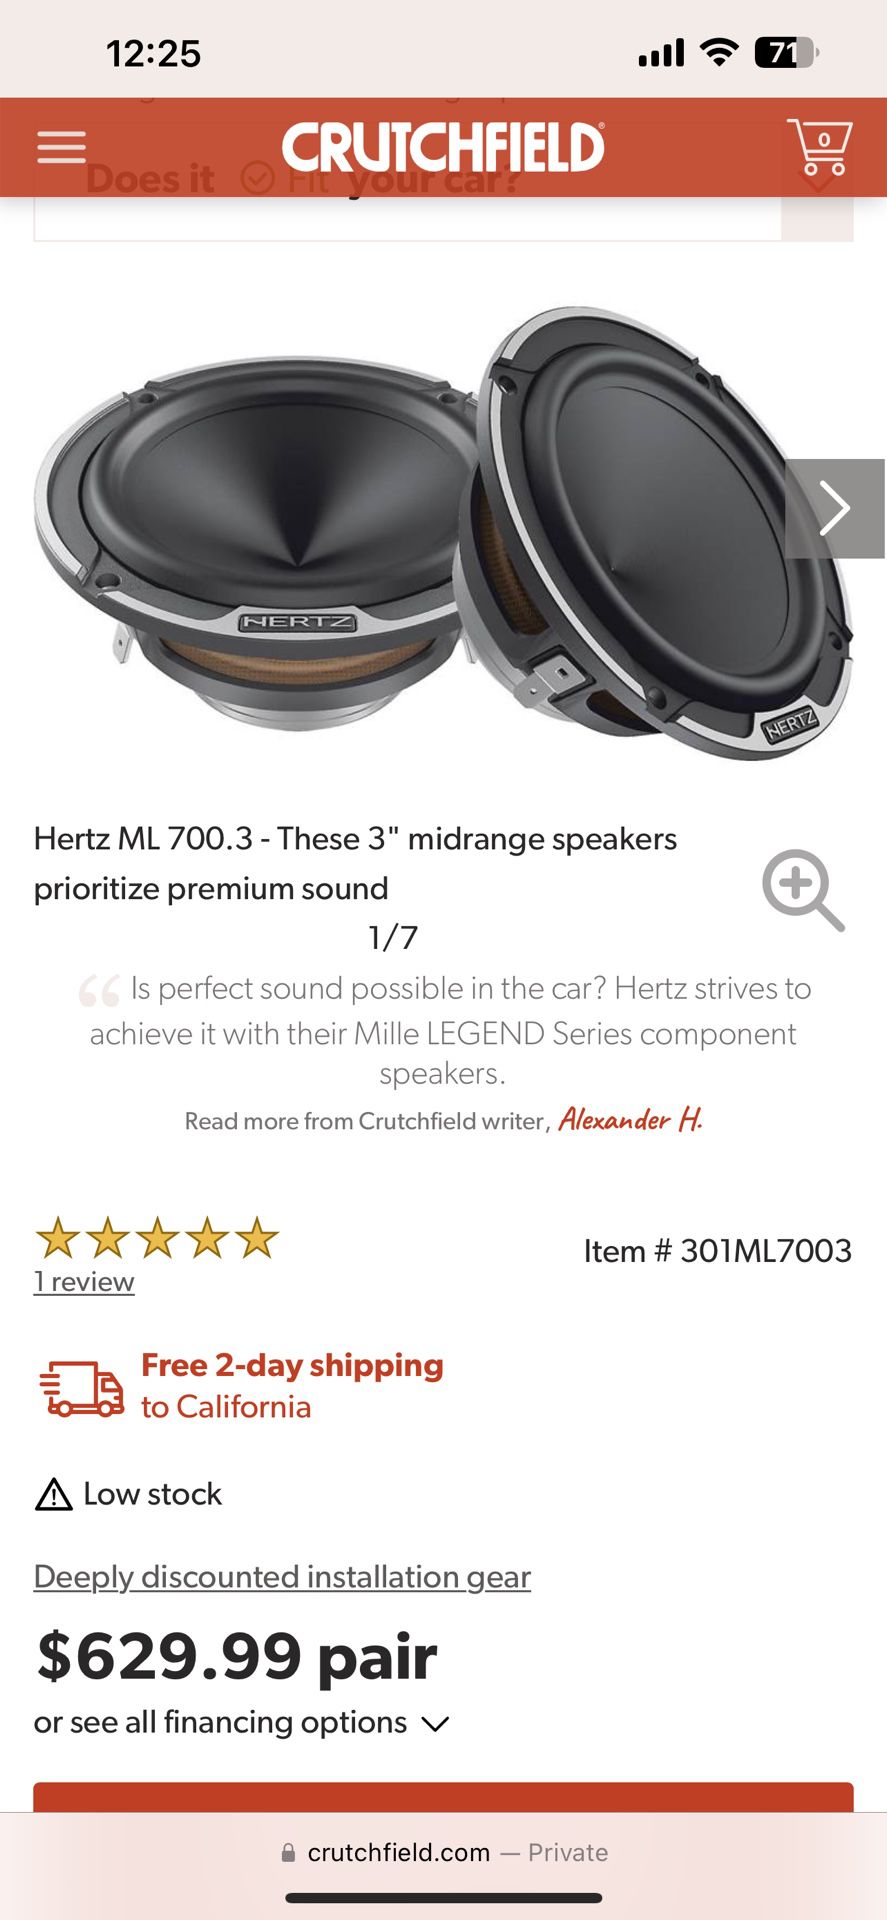 Hertz ML 700.3 Mille Legend Series 3" midrange speakers